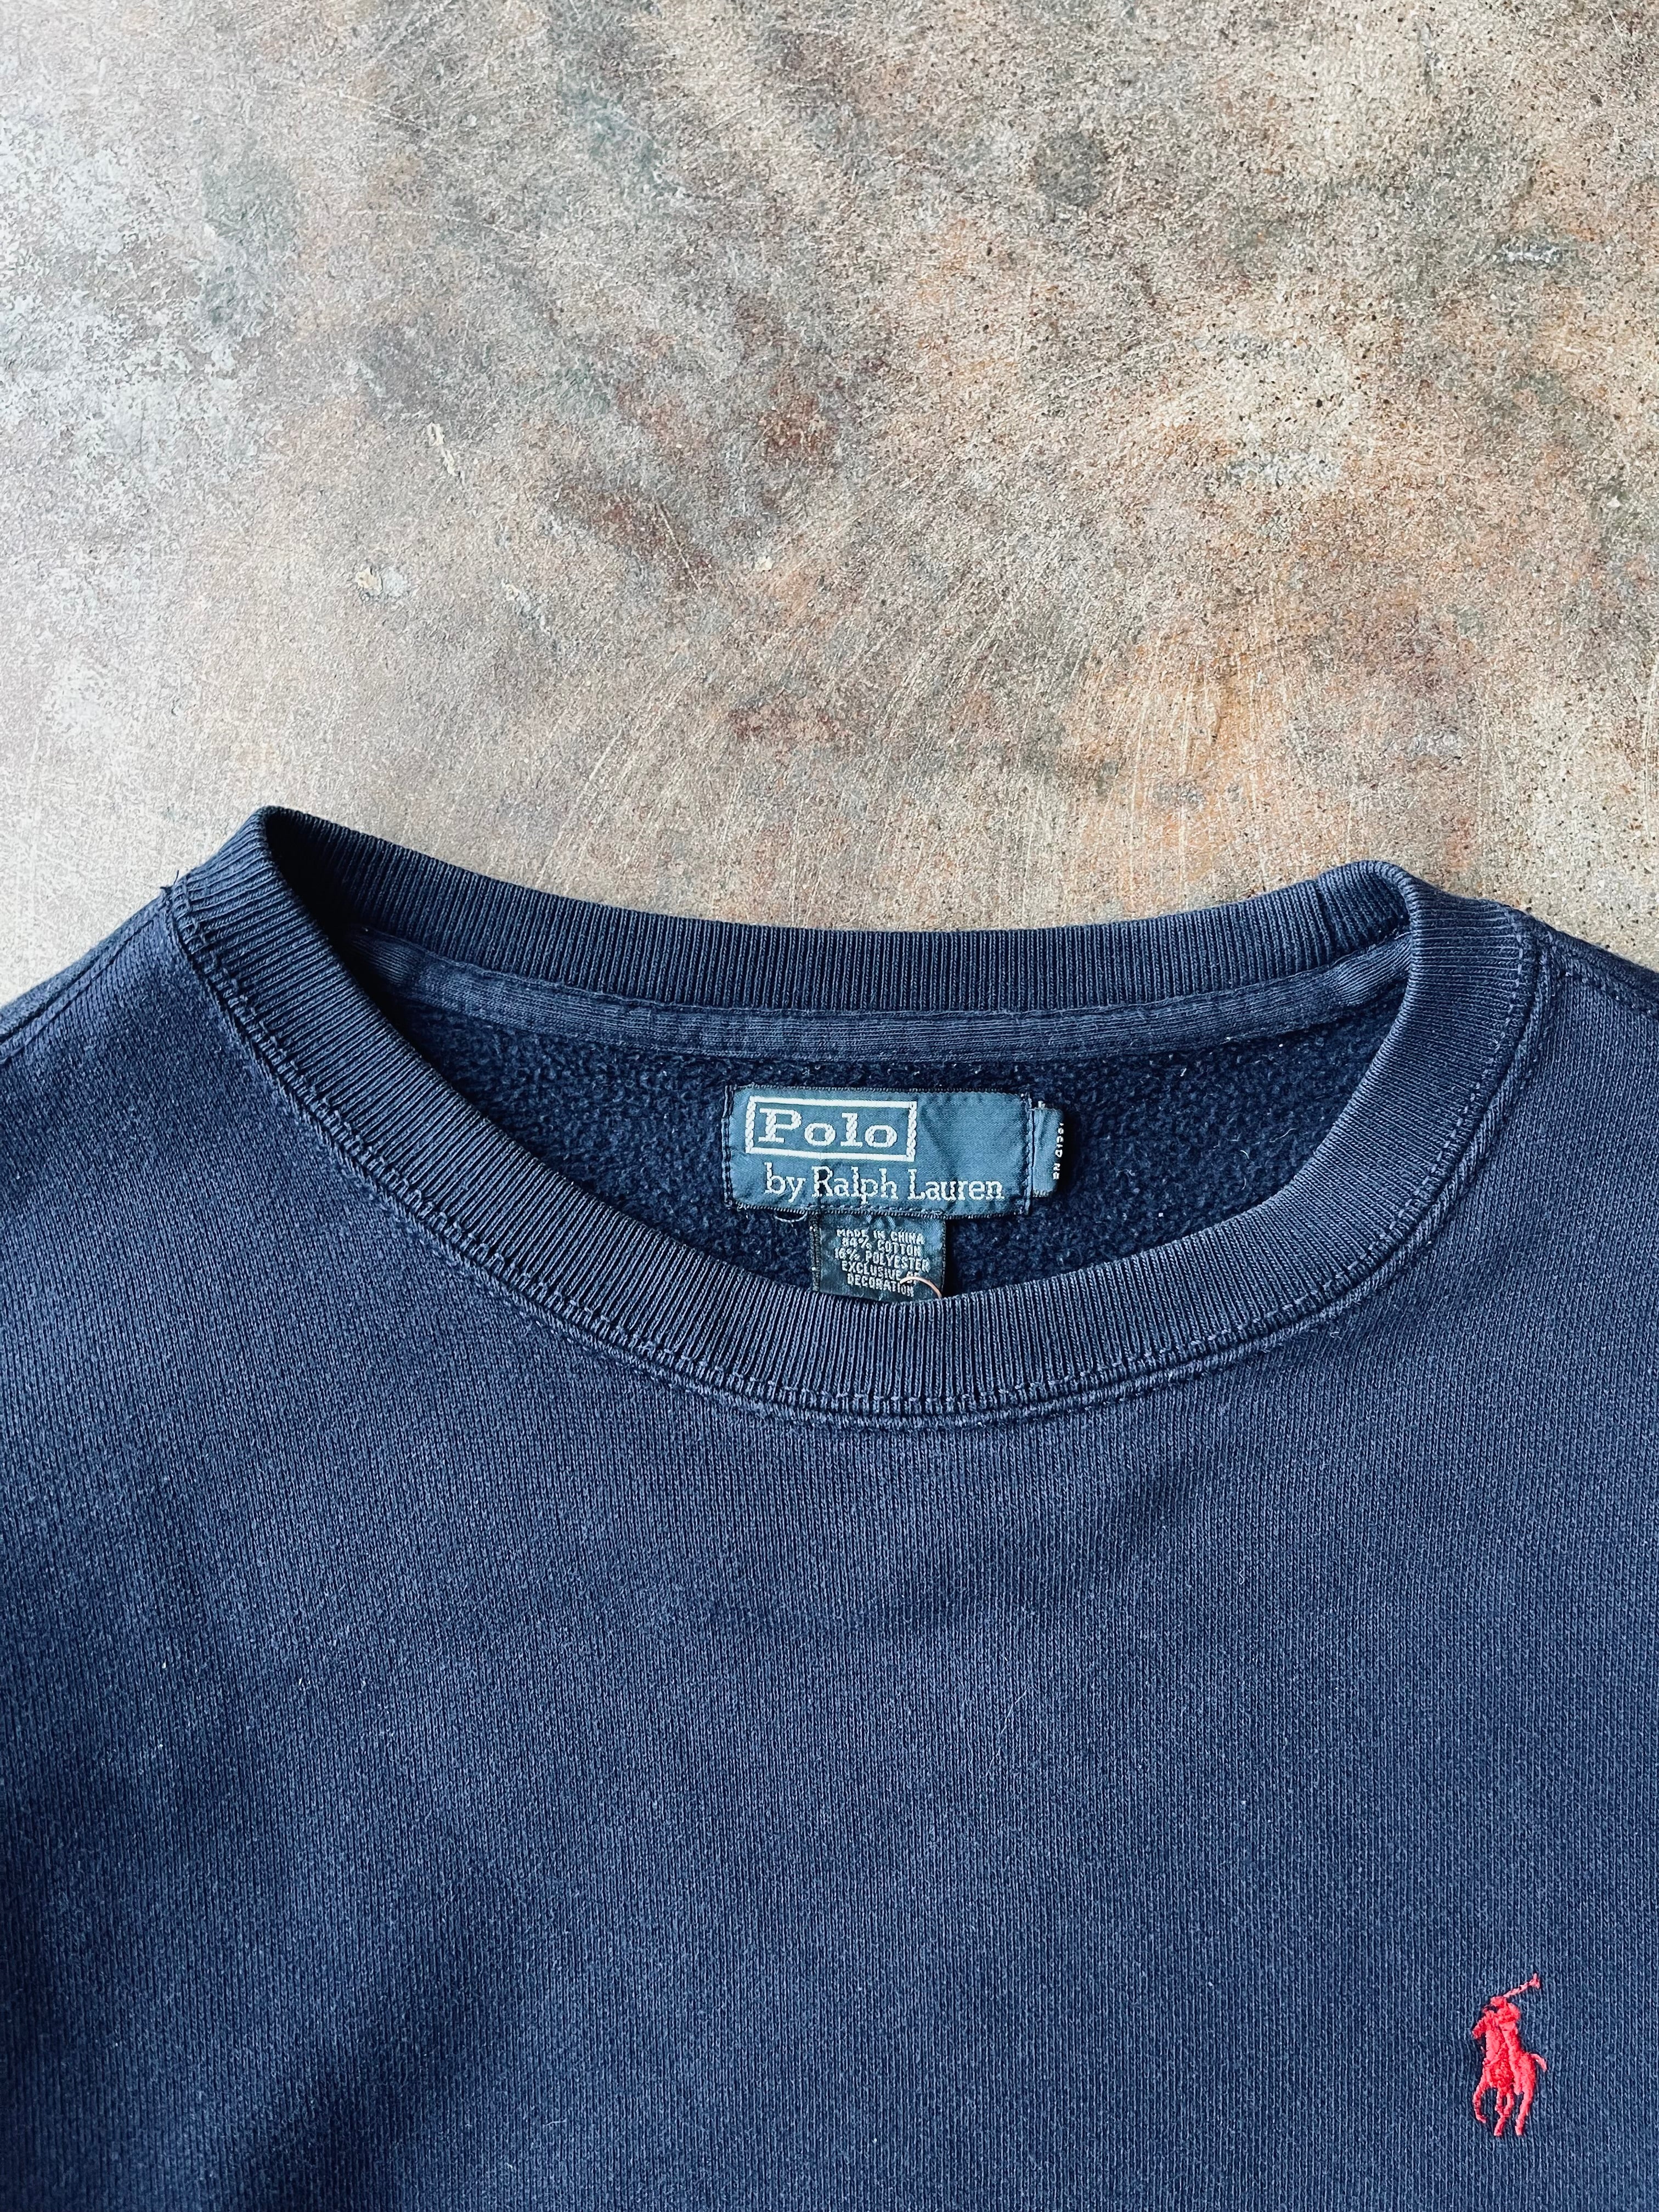 Vintage Polo Ralph Lauren Crewneck Sweatshirt | Small